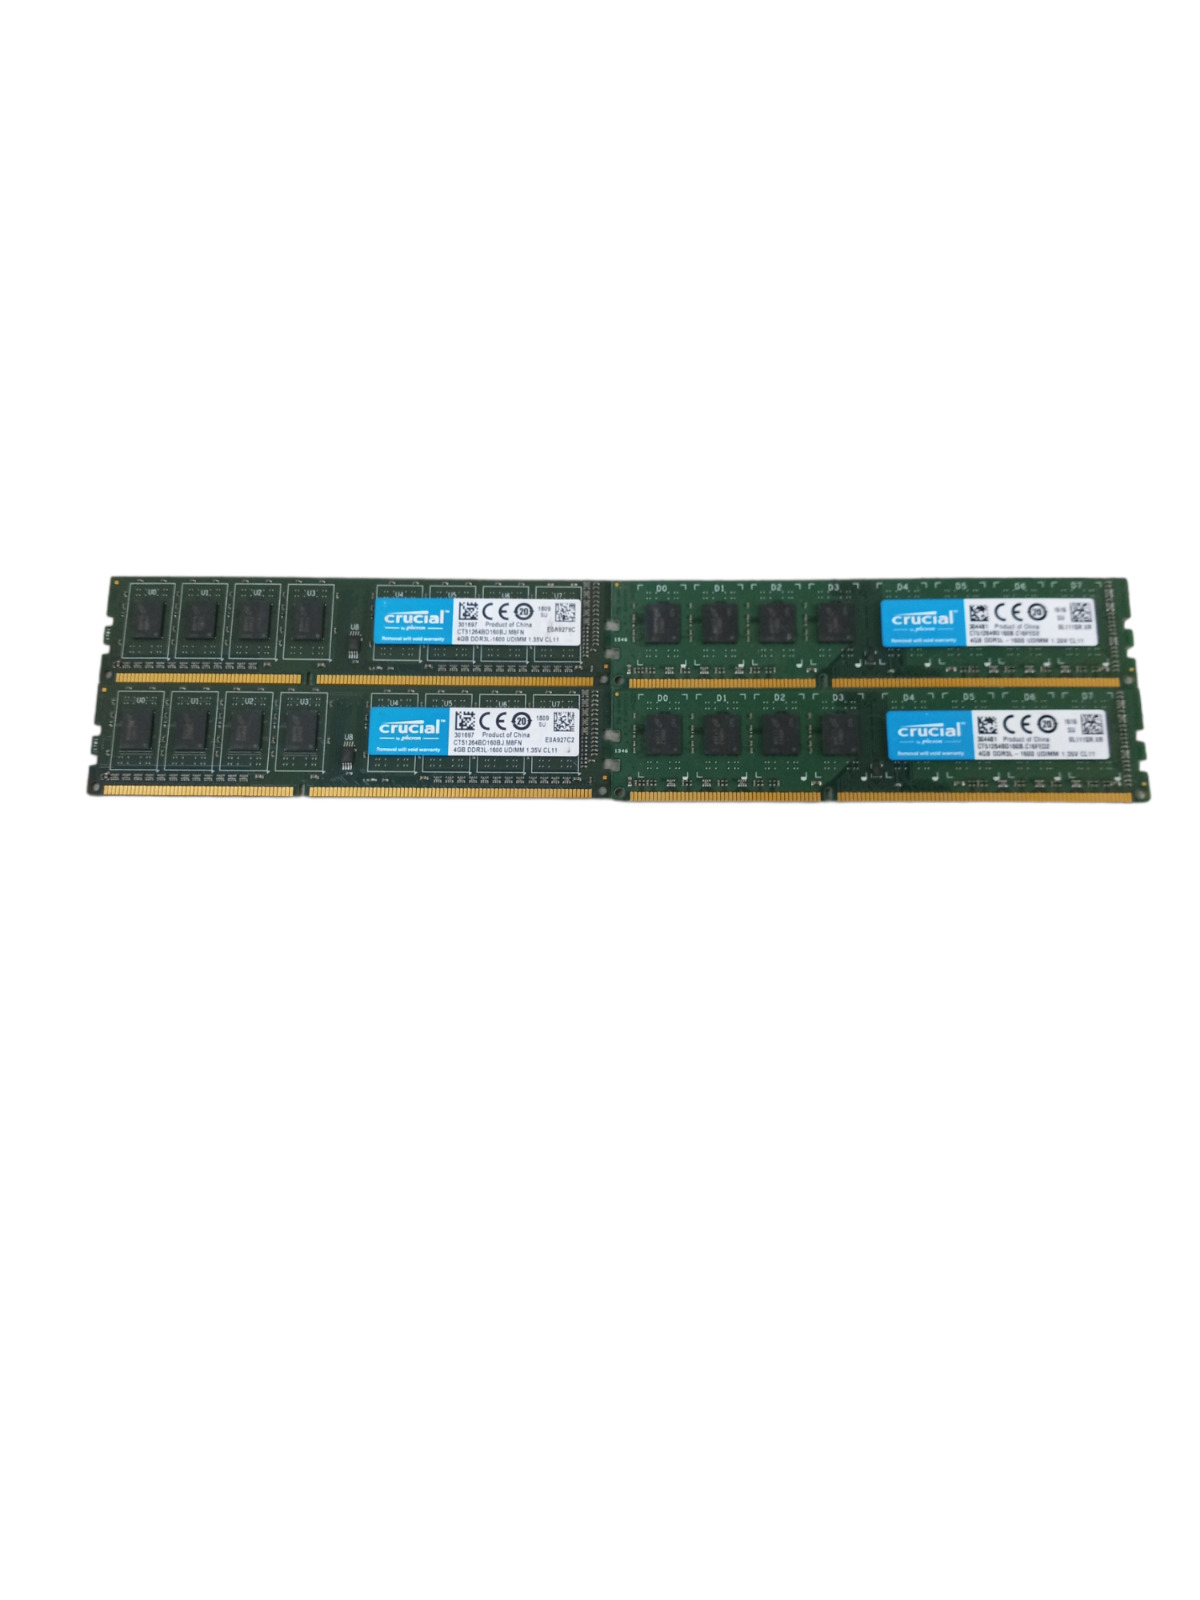 Crucial CT51264BD160BJ Kit 16GB (4x 4GB) 1600MHz DDR3L UDIMM 1RX8 Desktop Memory